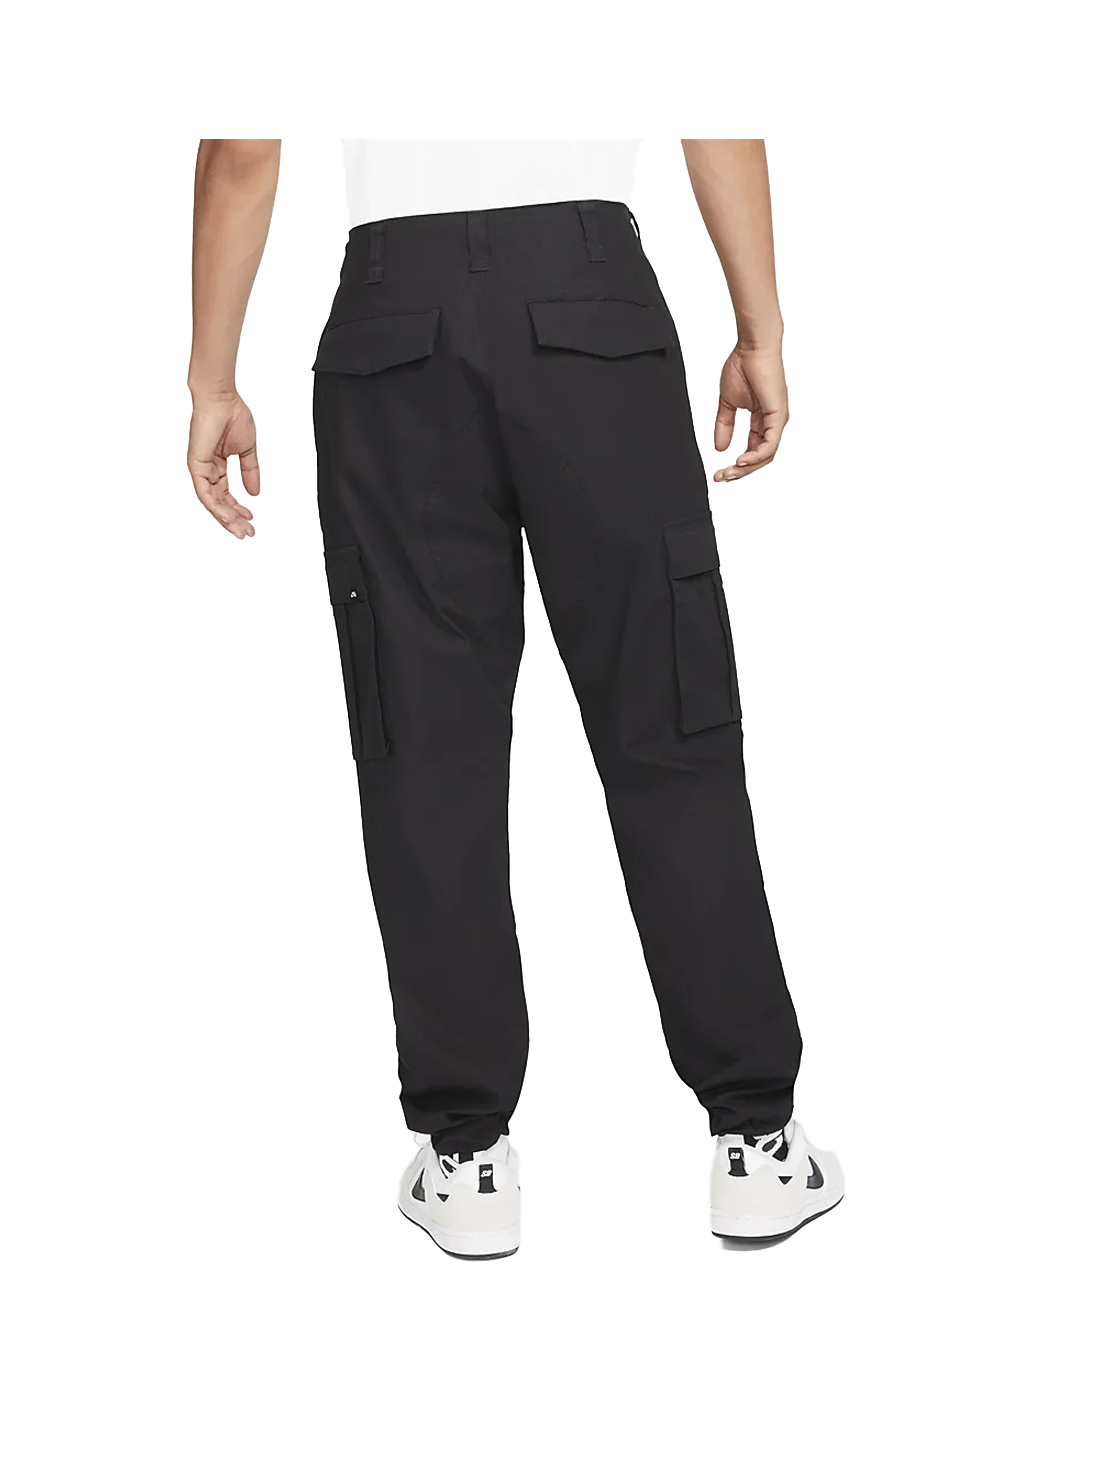 Nike SB FTM Cargo Pants - Black - WeAreCivil.com